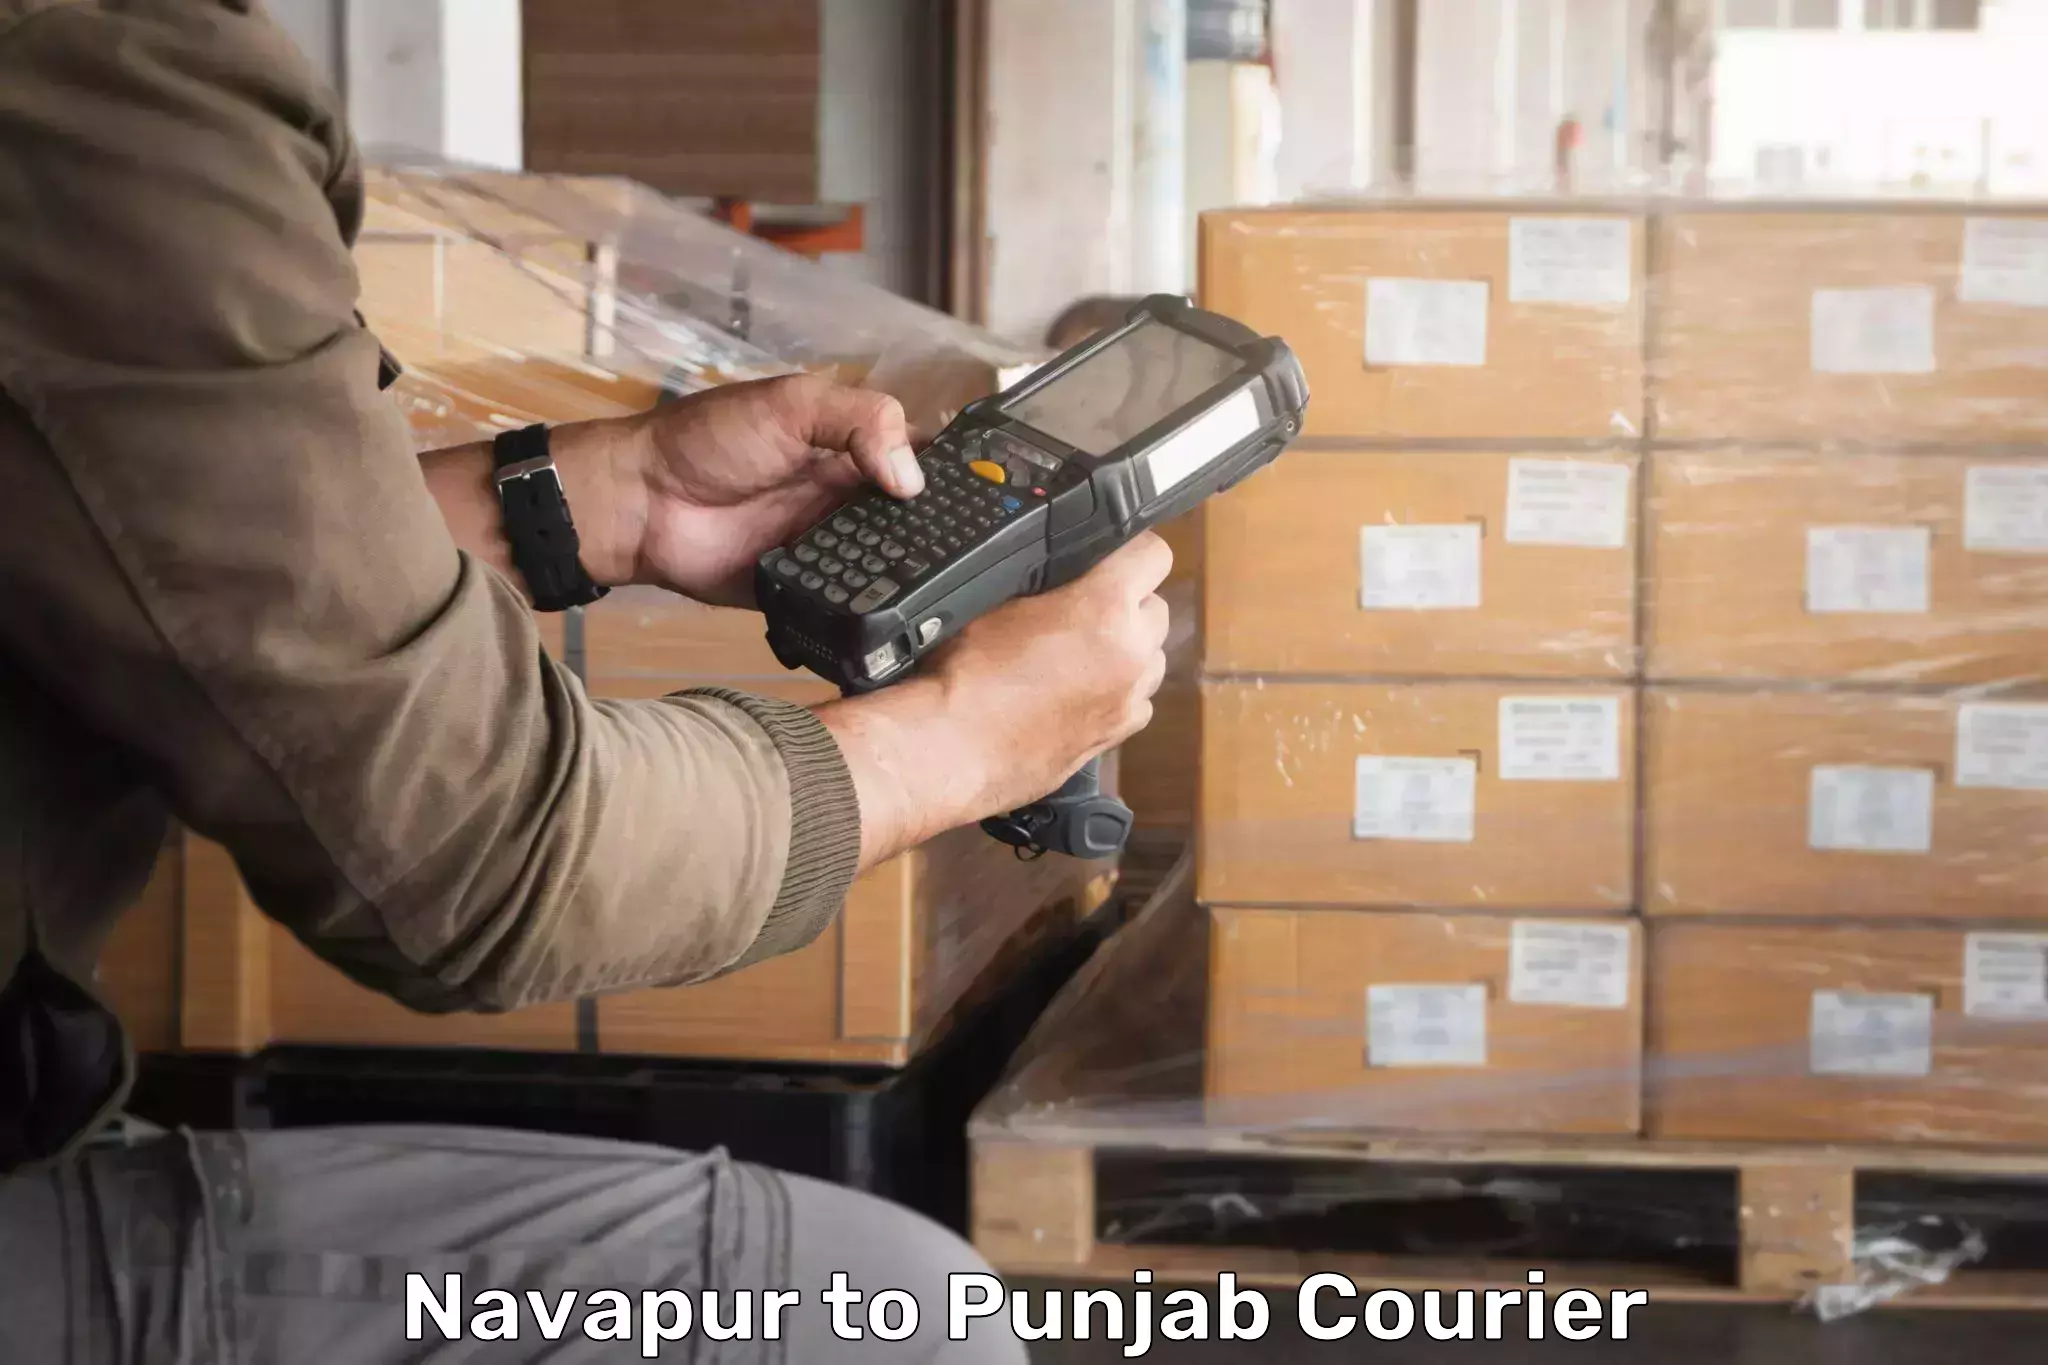 User-friendly courier app Navapur to Punjab